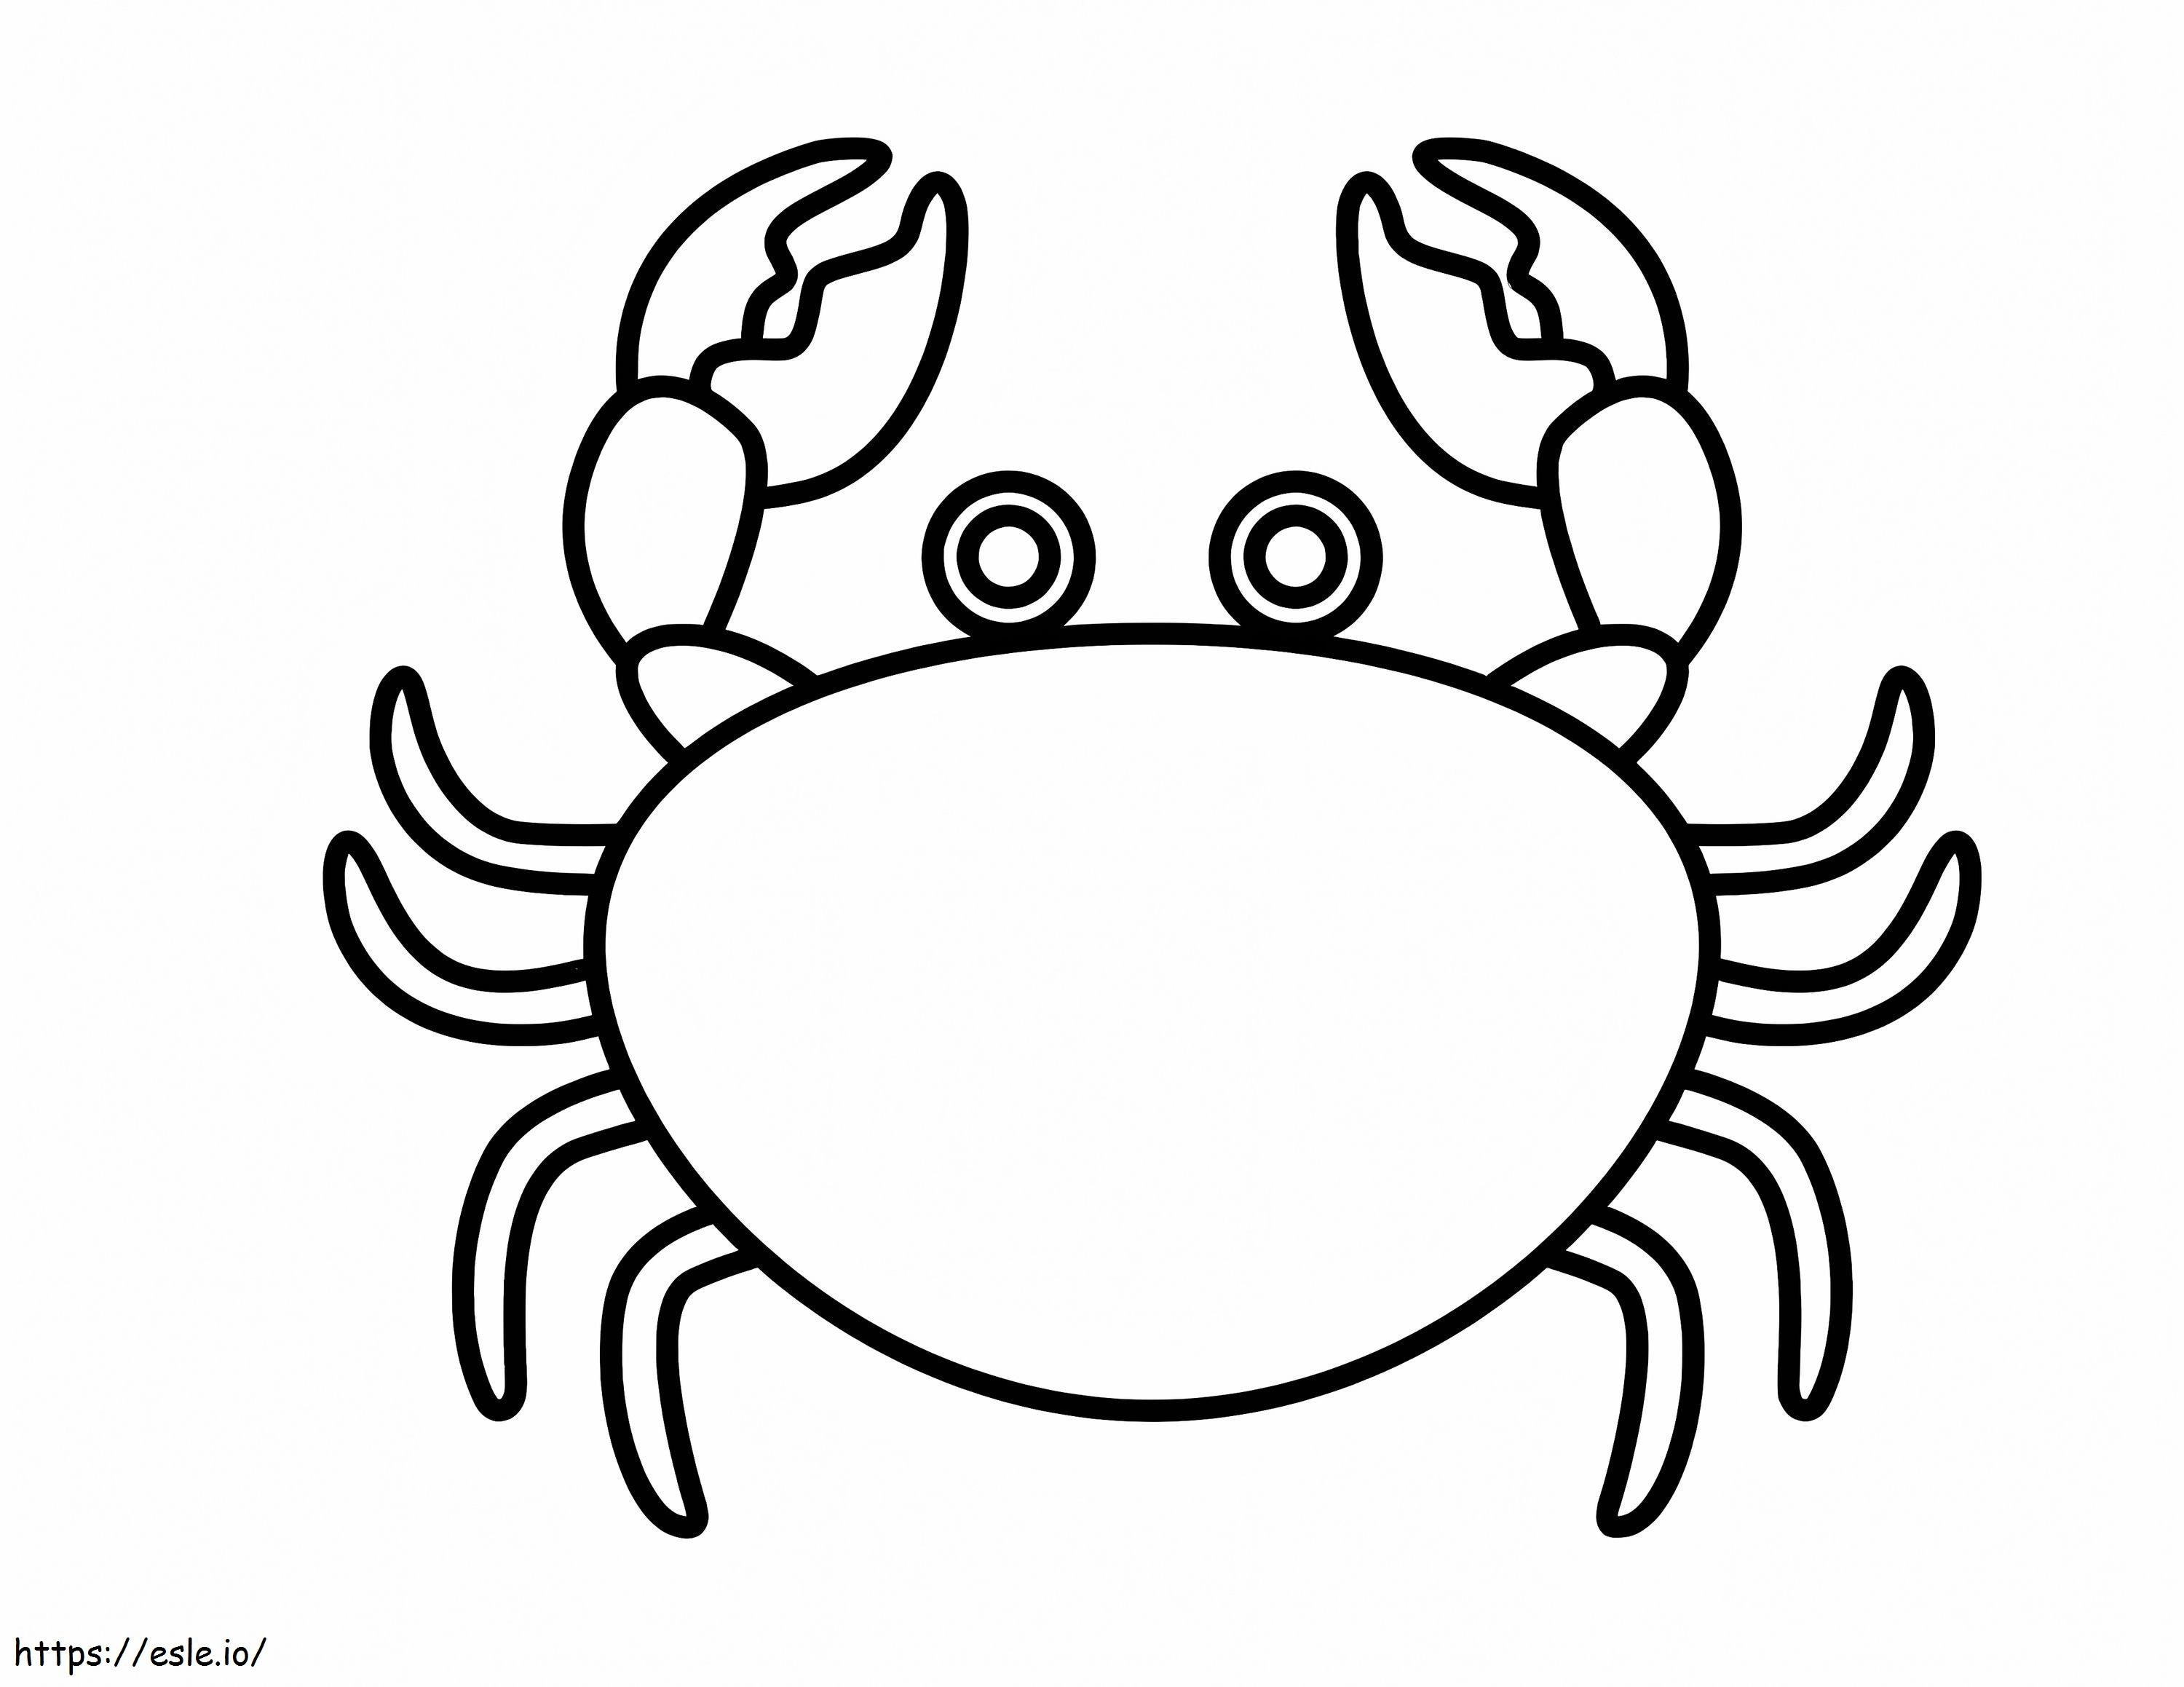 Easy Crab coloring page